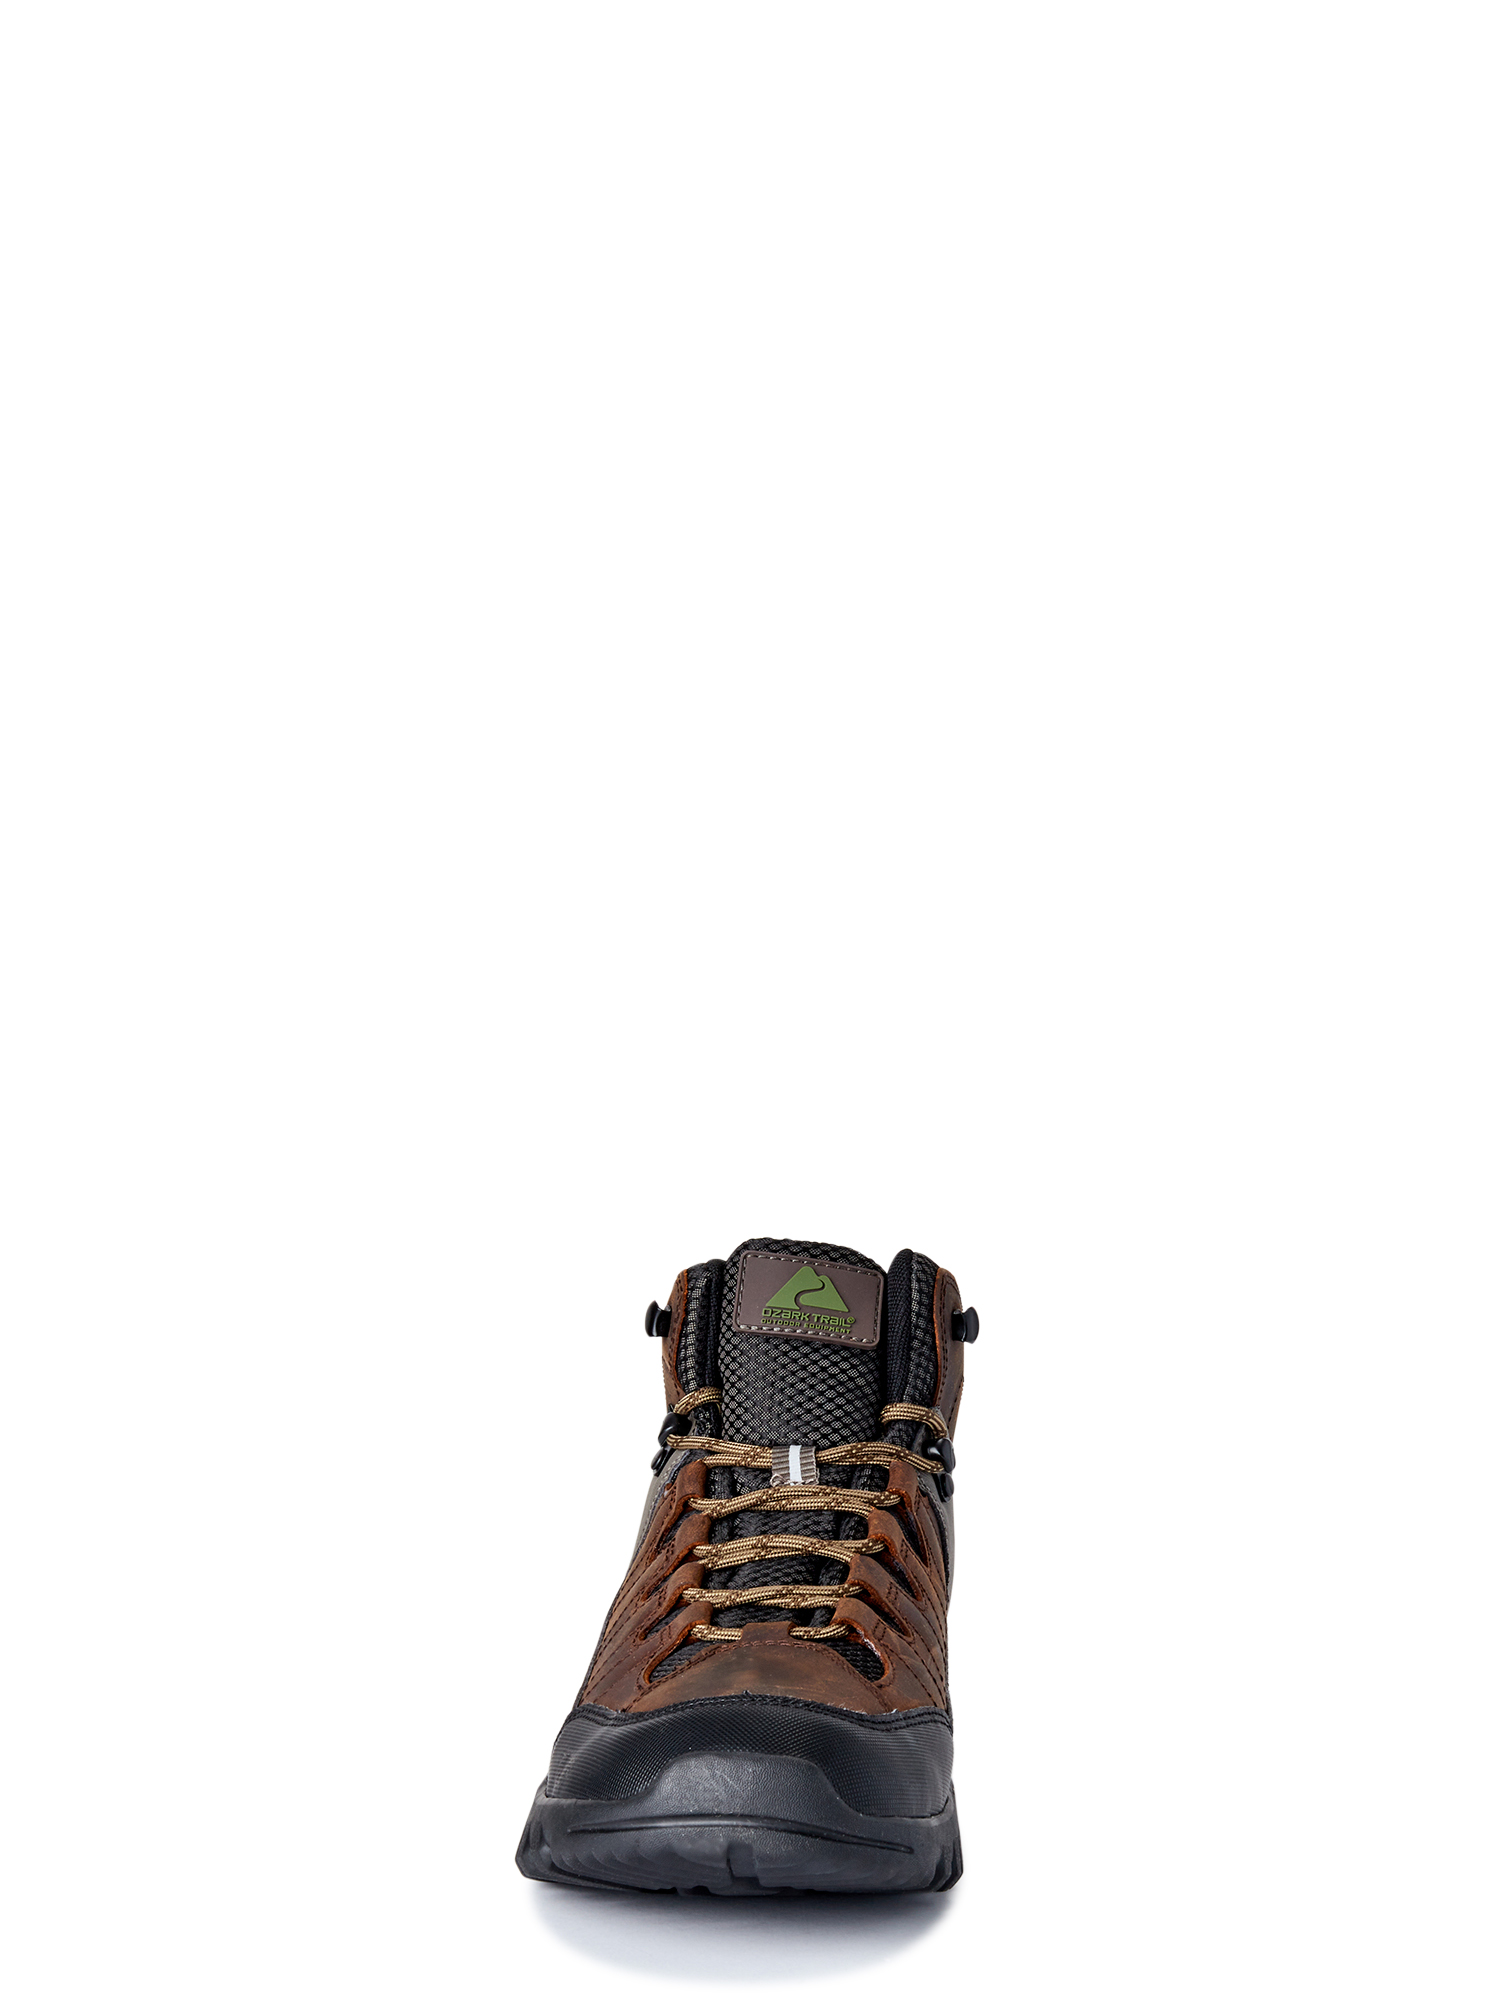 Ozark Trail Men's Meadows Waterproof Casual Mid Hiking Boots,size6-13